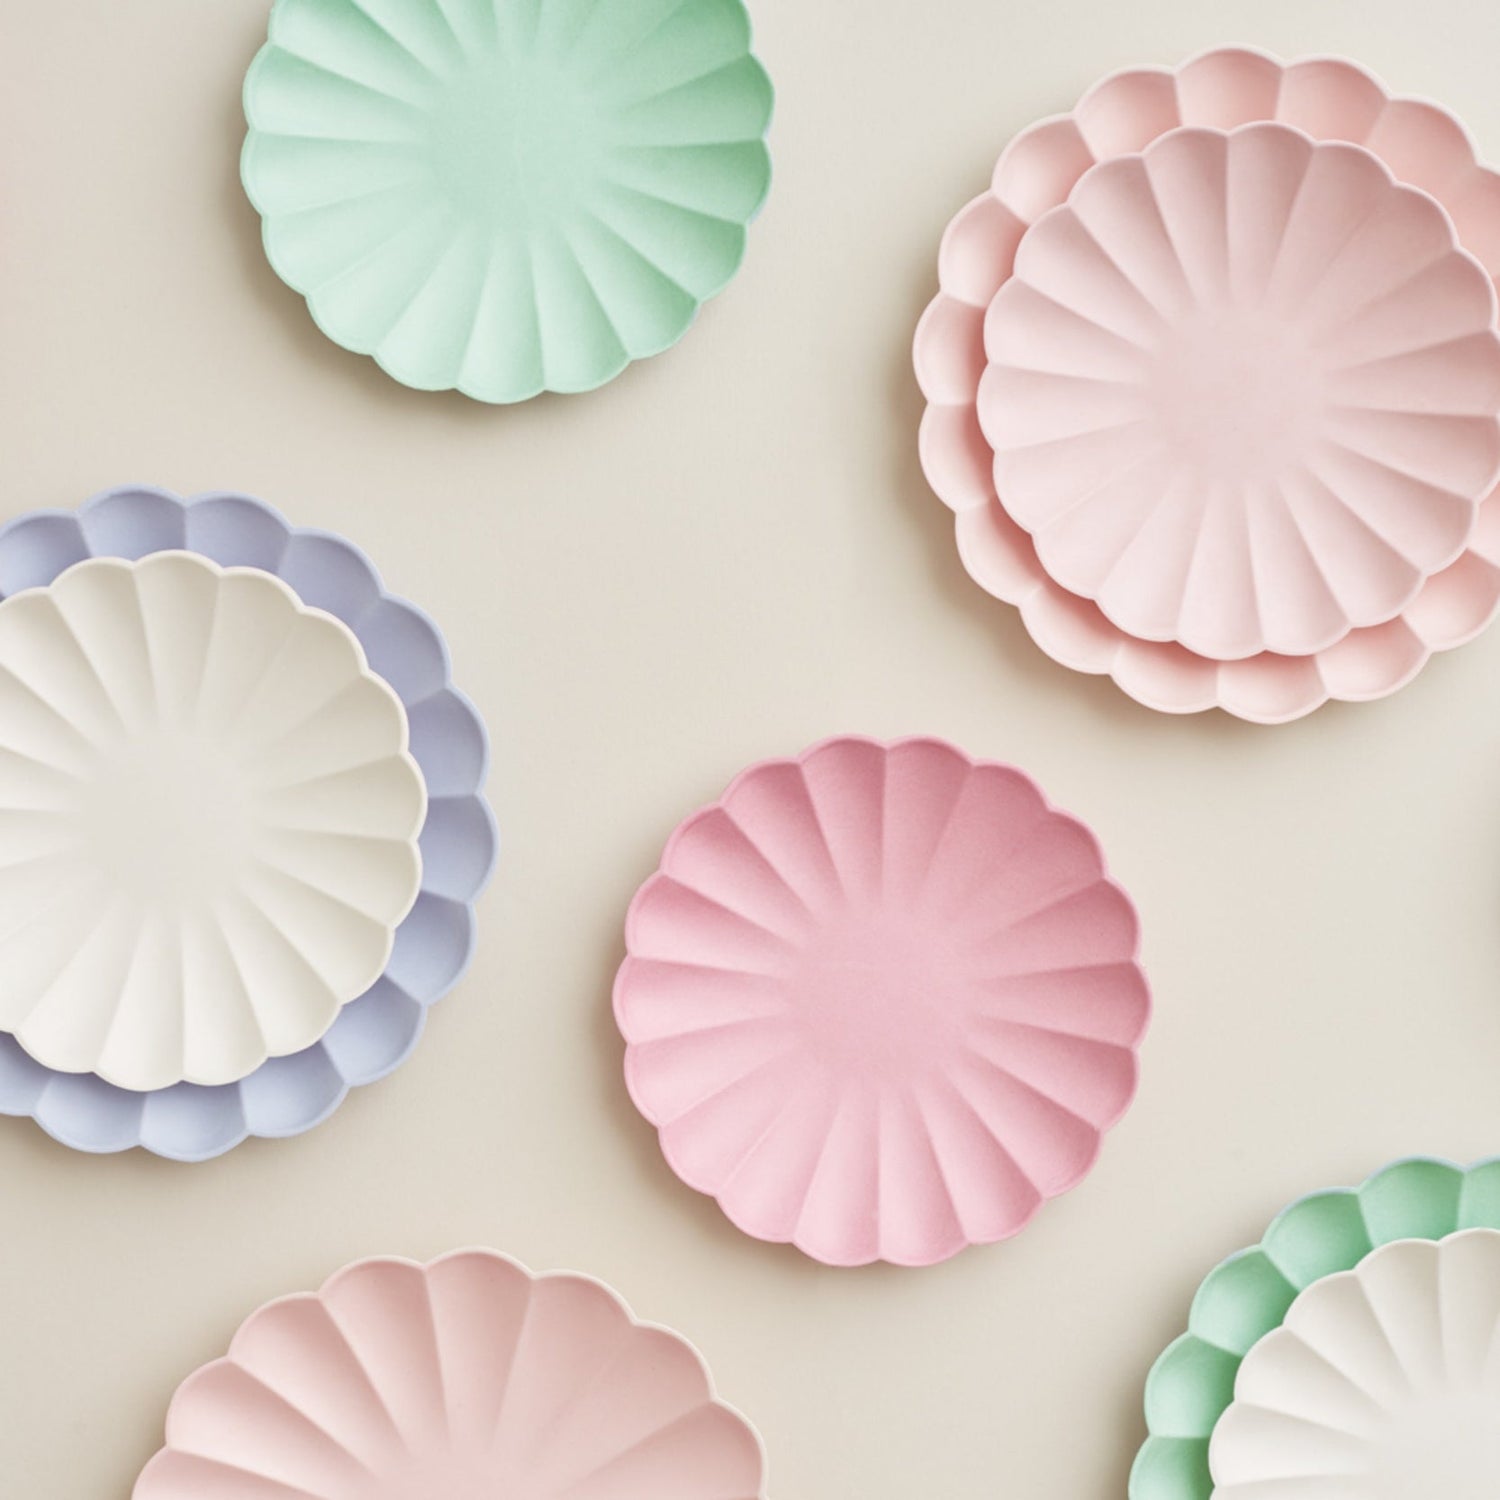 Meri Meri Cream Eco plates in pastel colors on a white background.